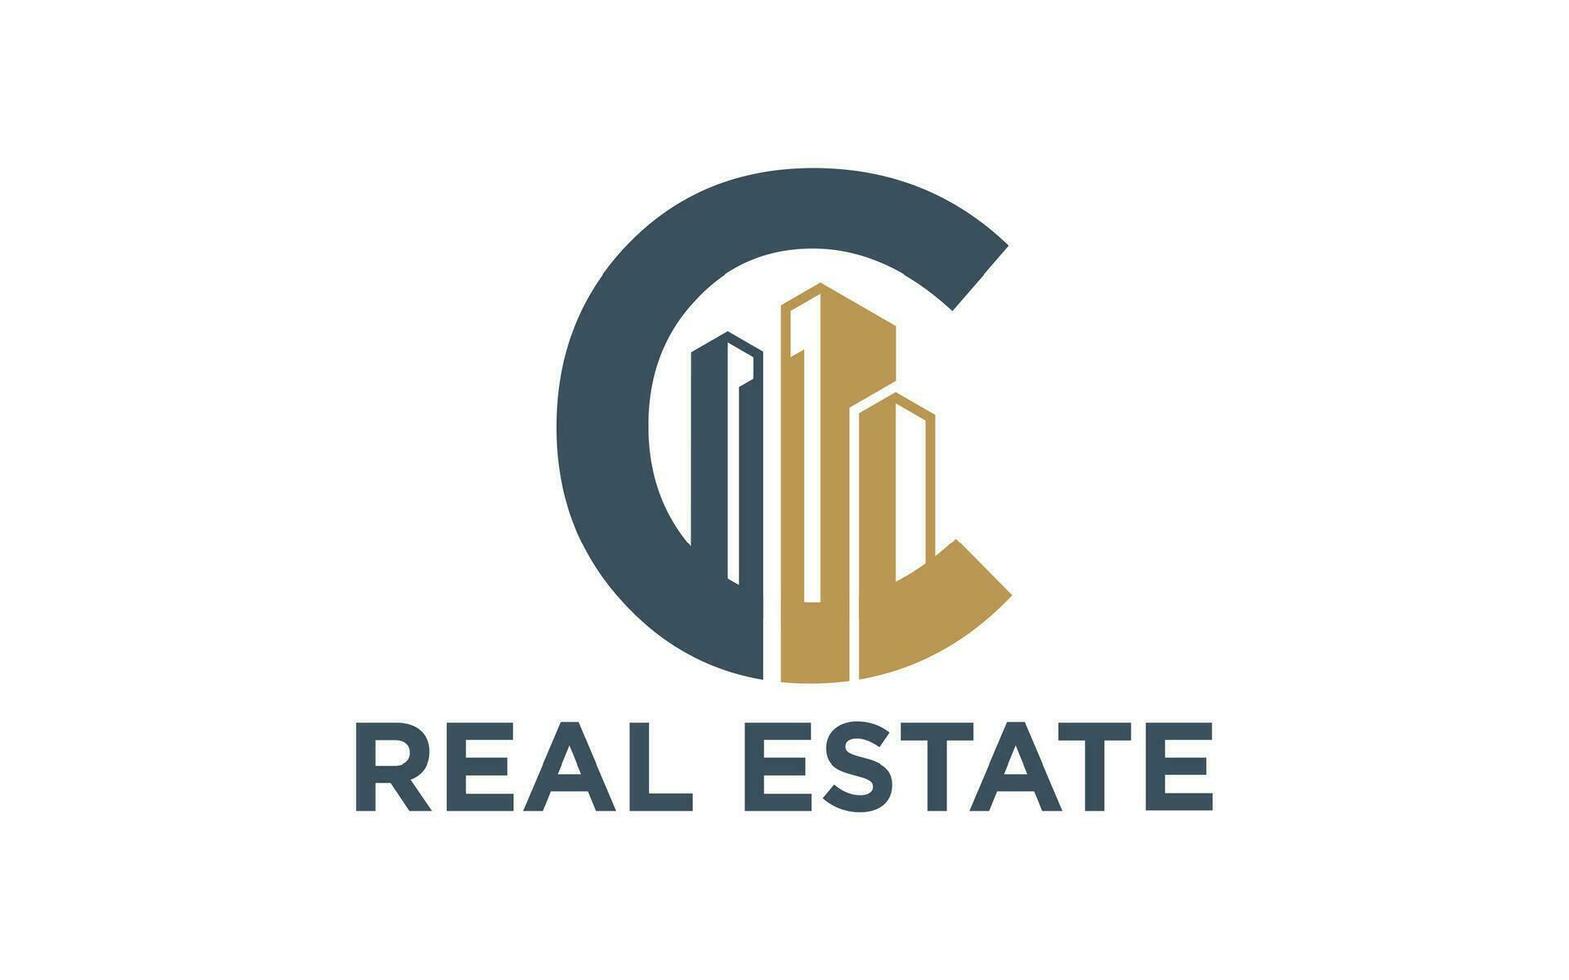 Real Estate, Building and Construction Logo Design vector